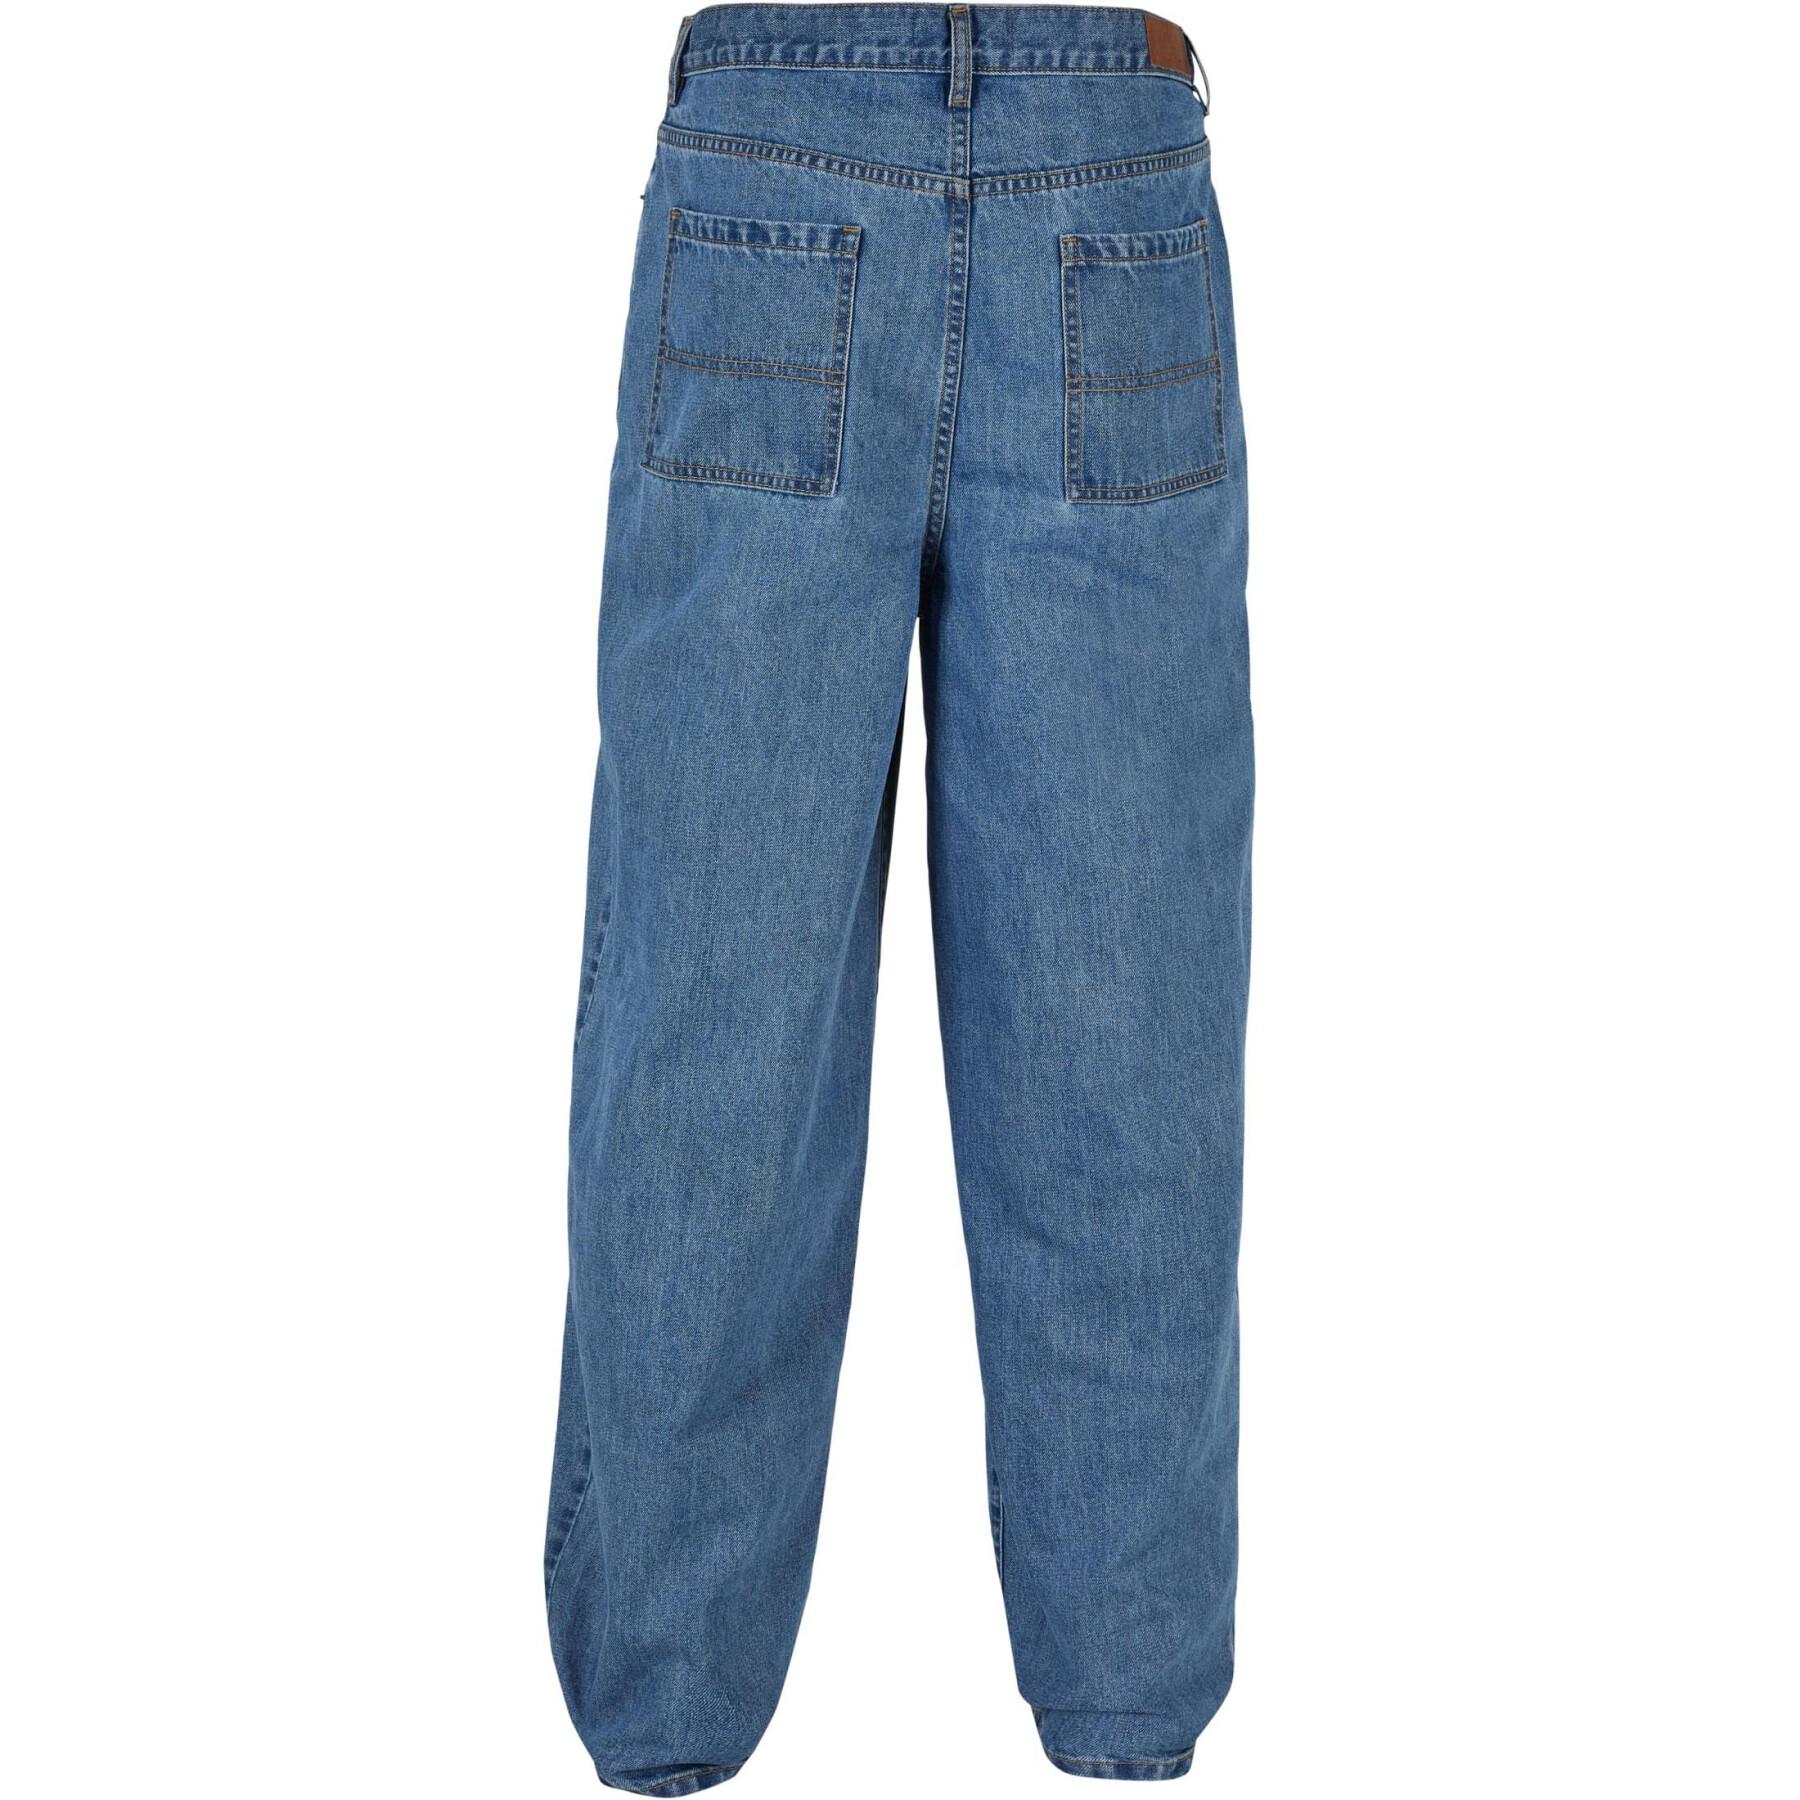 Jeans grote maten Urban Classics 90‘s